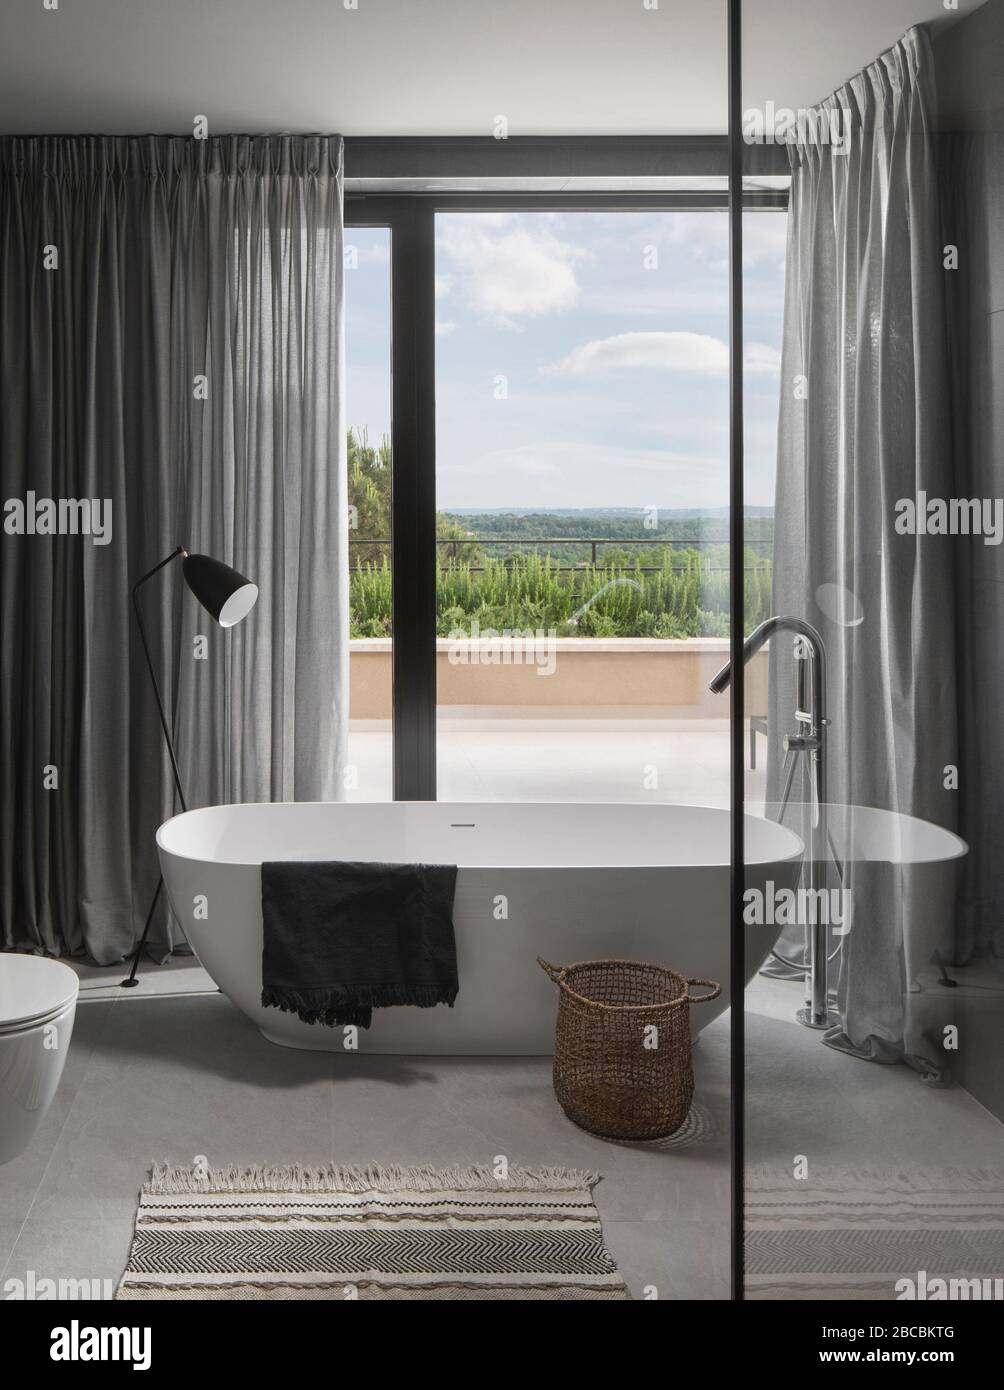 Modern elegant freestanding bath with landscape view. Stock Photo